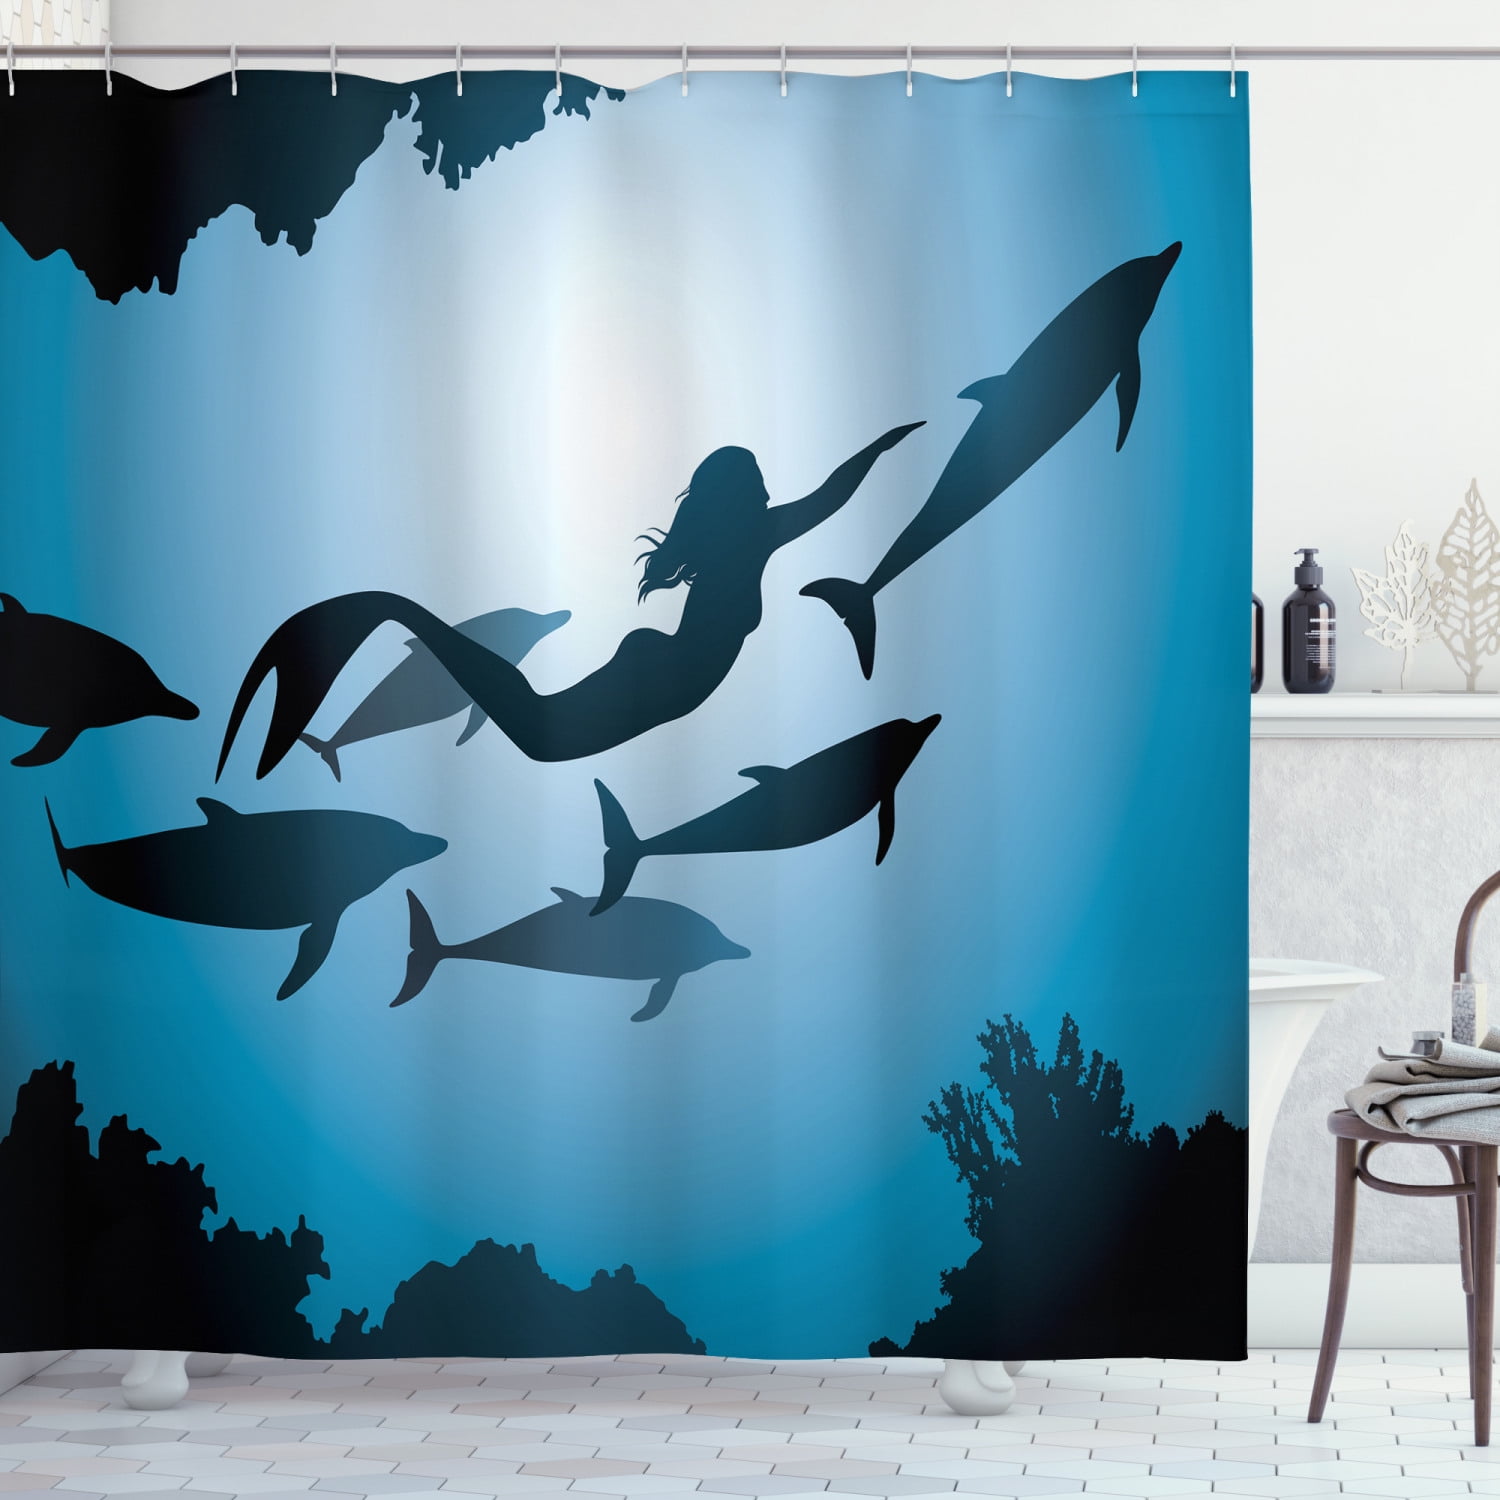 Undersea Mermaid and Dolphin Shower Curtain Liner Waterproof Fabric Bathroom Mat